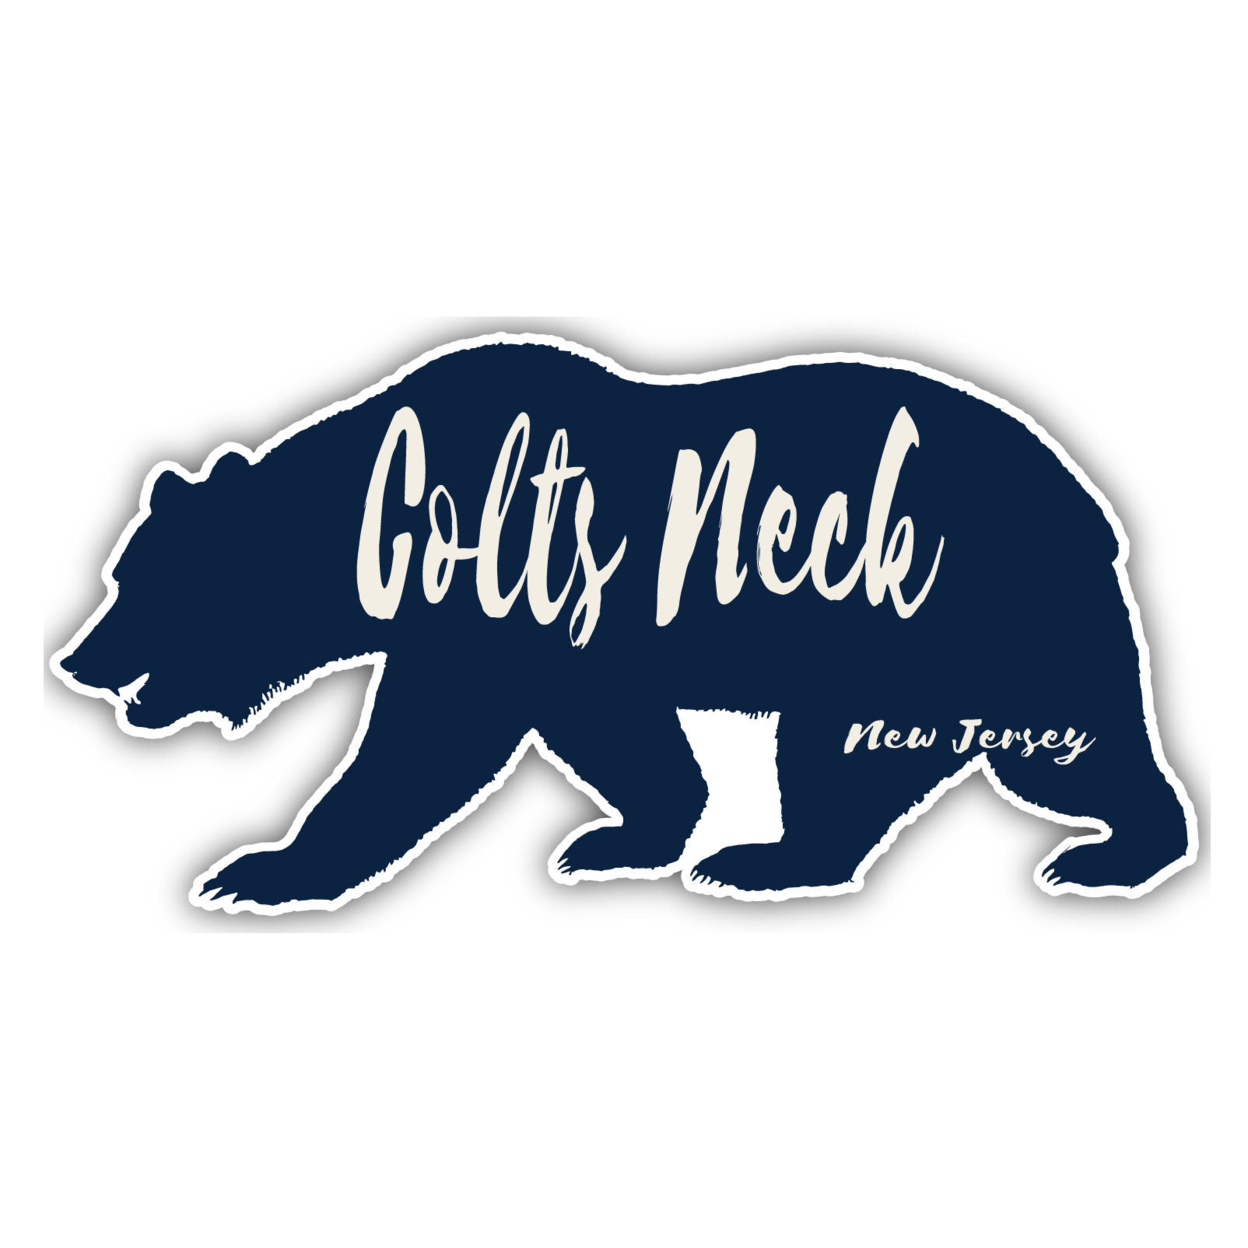 Colts Neck New Jersey Souvenir Decorative Stickers (Choose Theme And Size) - Single Unit, 4-Inch, Bear